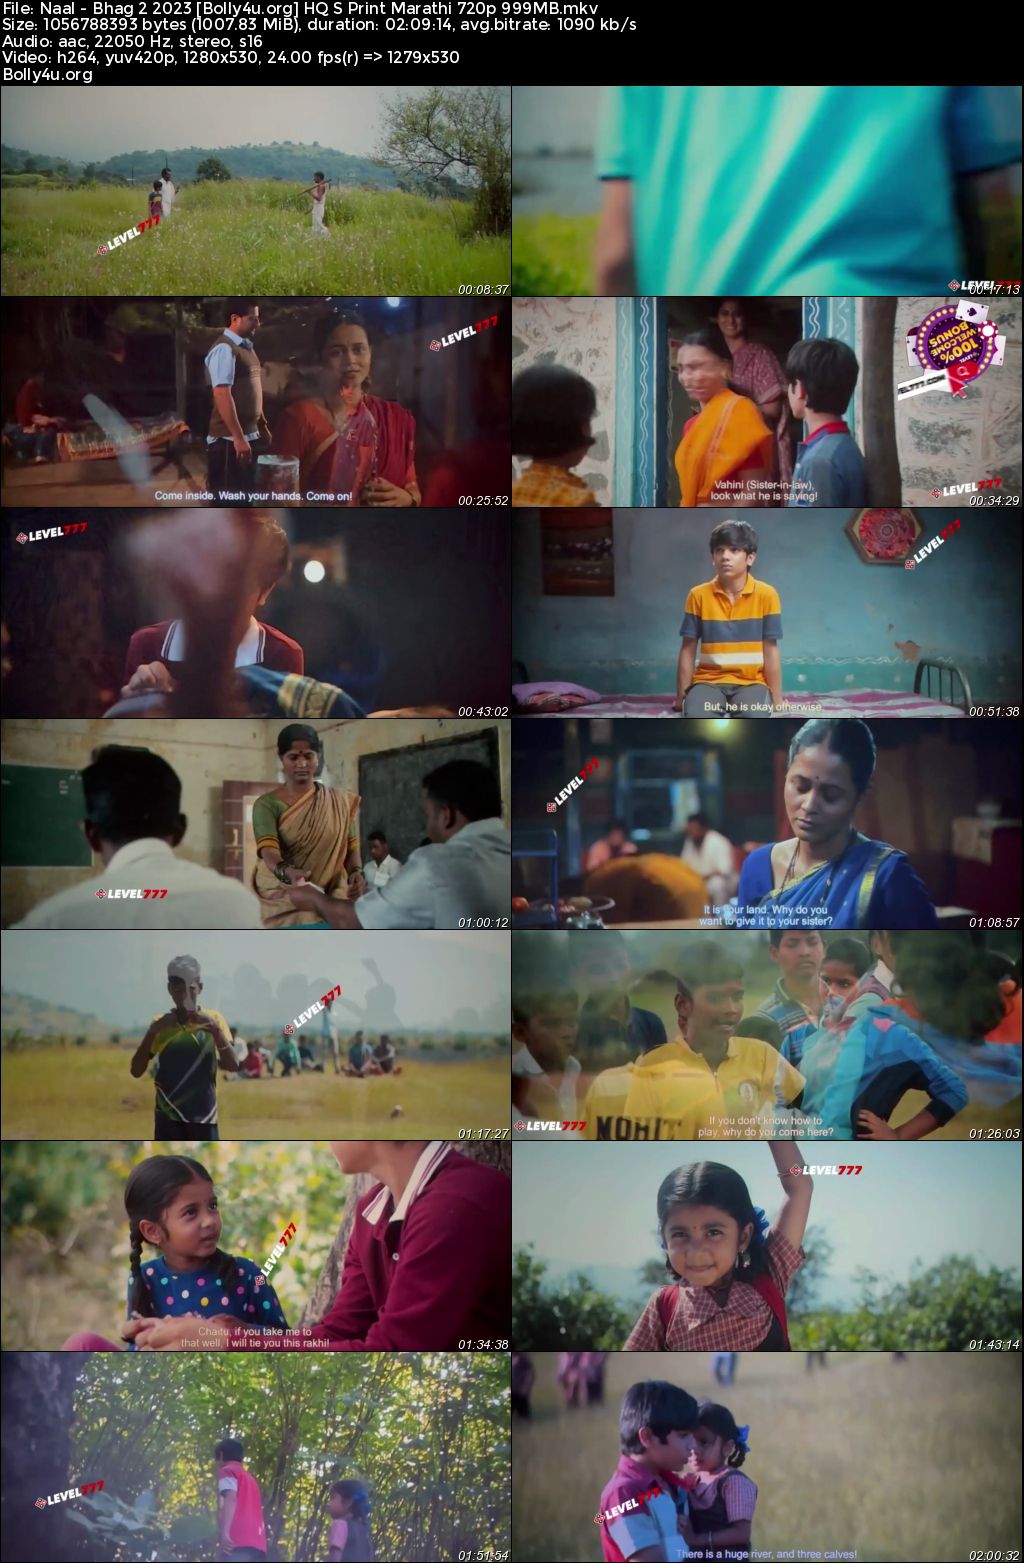 Naal Bhag 2 2023 HQ S Print Marathi Full Movie Download 720p 480p